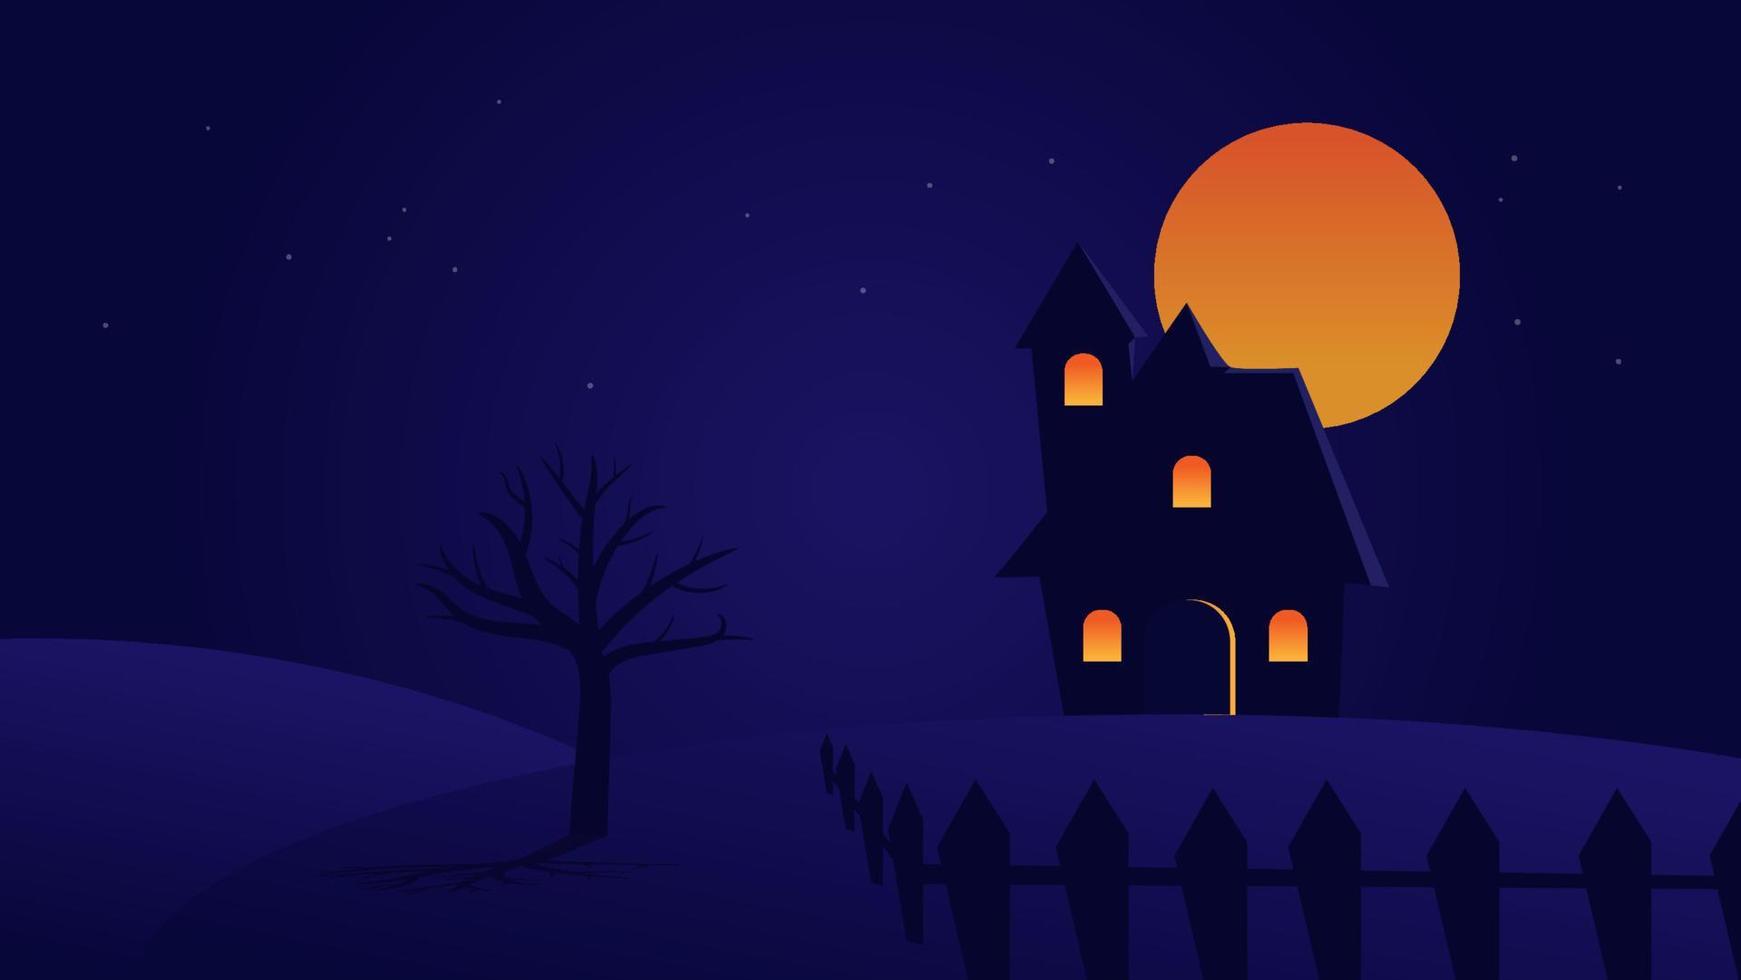 haunted castle cartoon with full moon in night sky vector